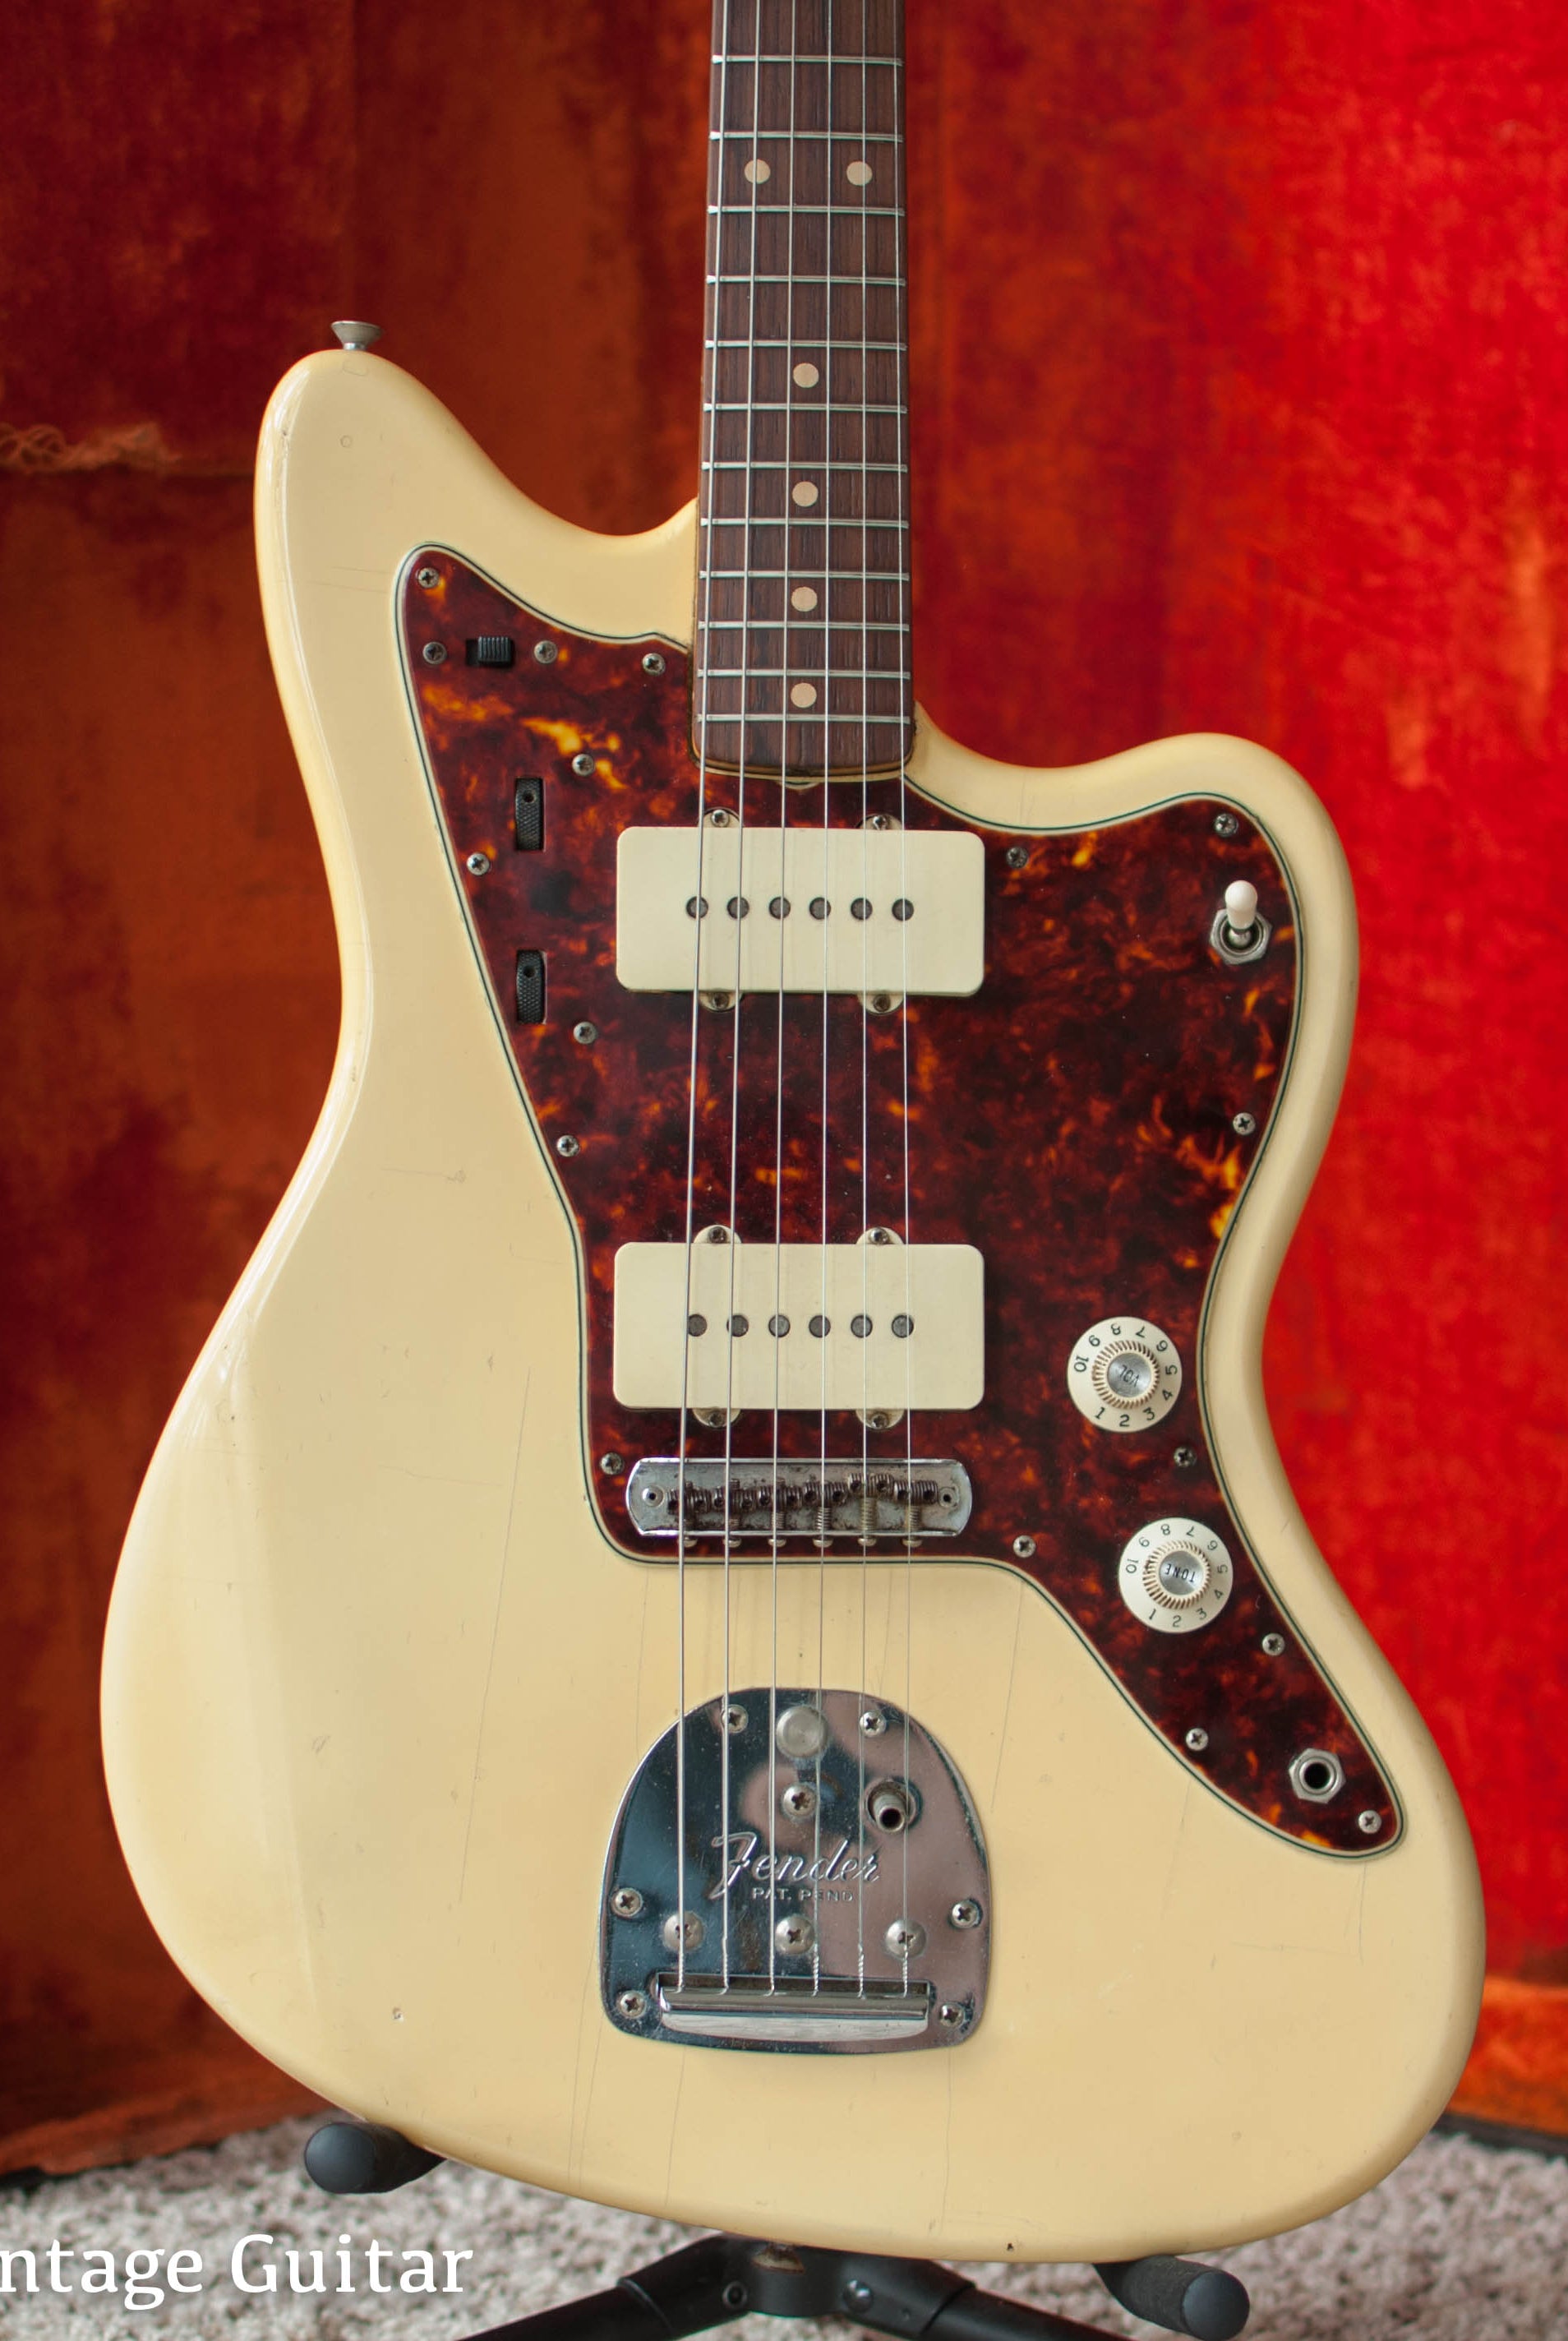 Vintage 1961 Fender Jazzmaster guitar white refinish